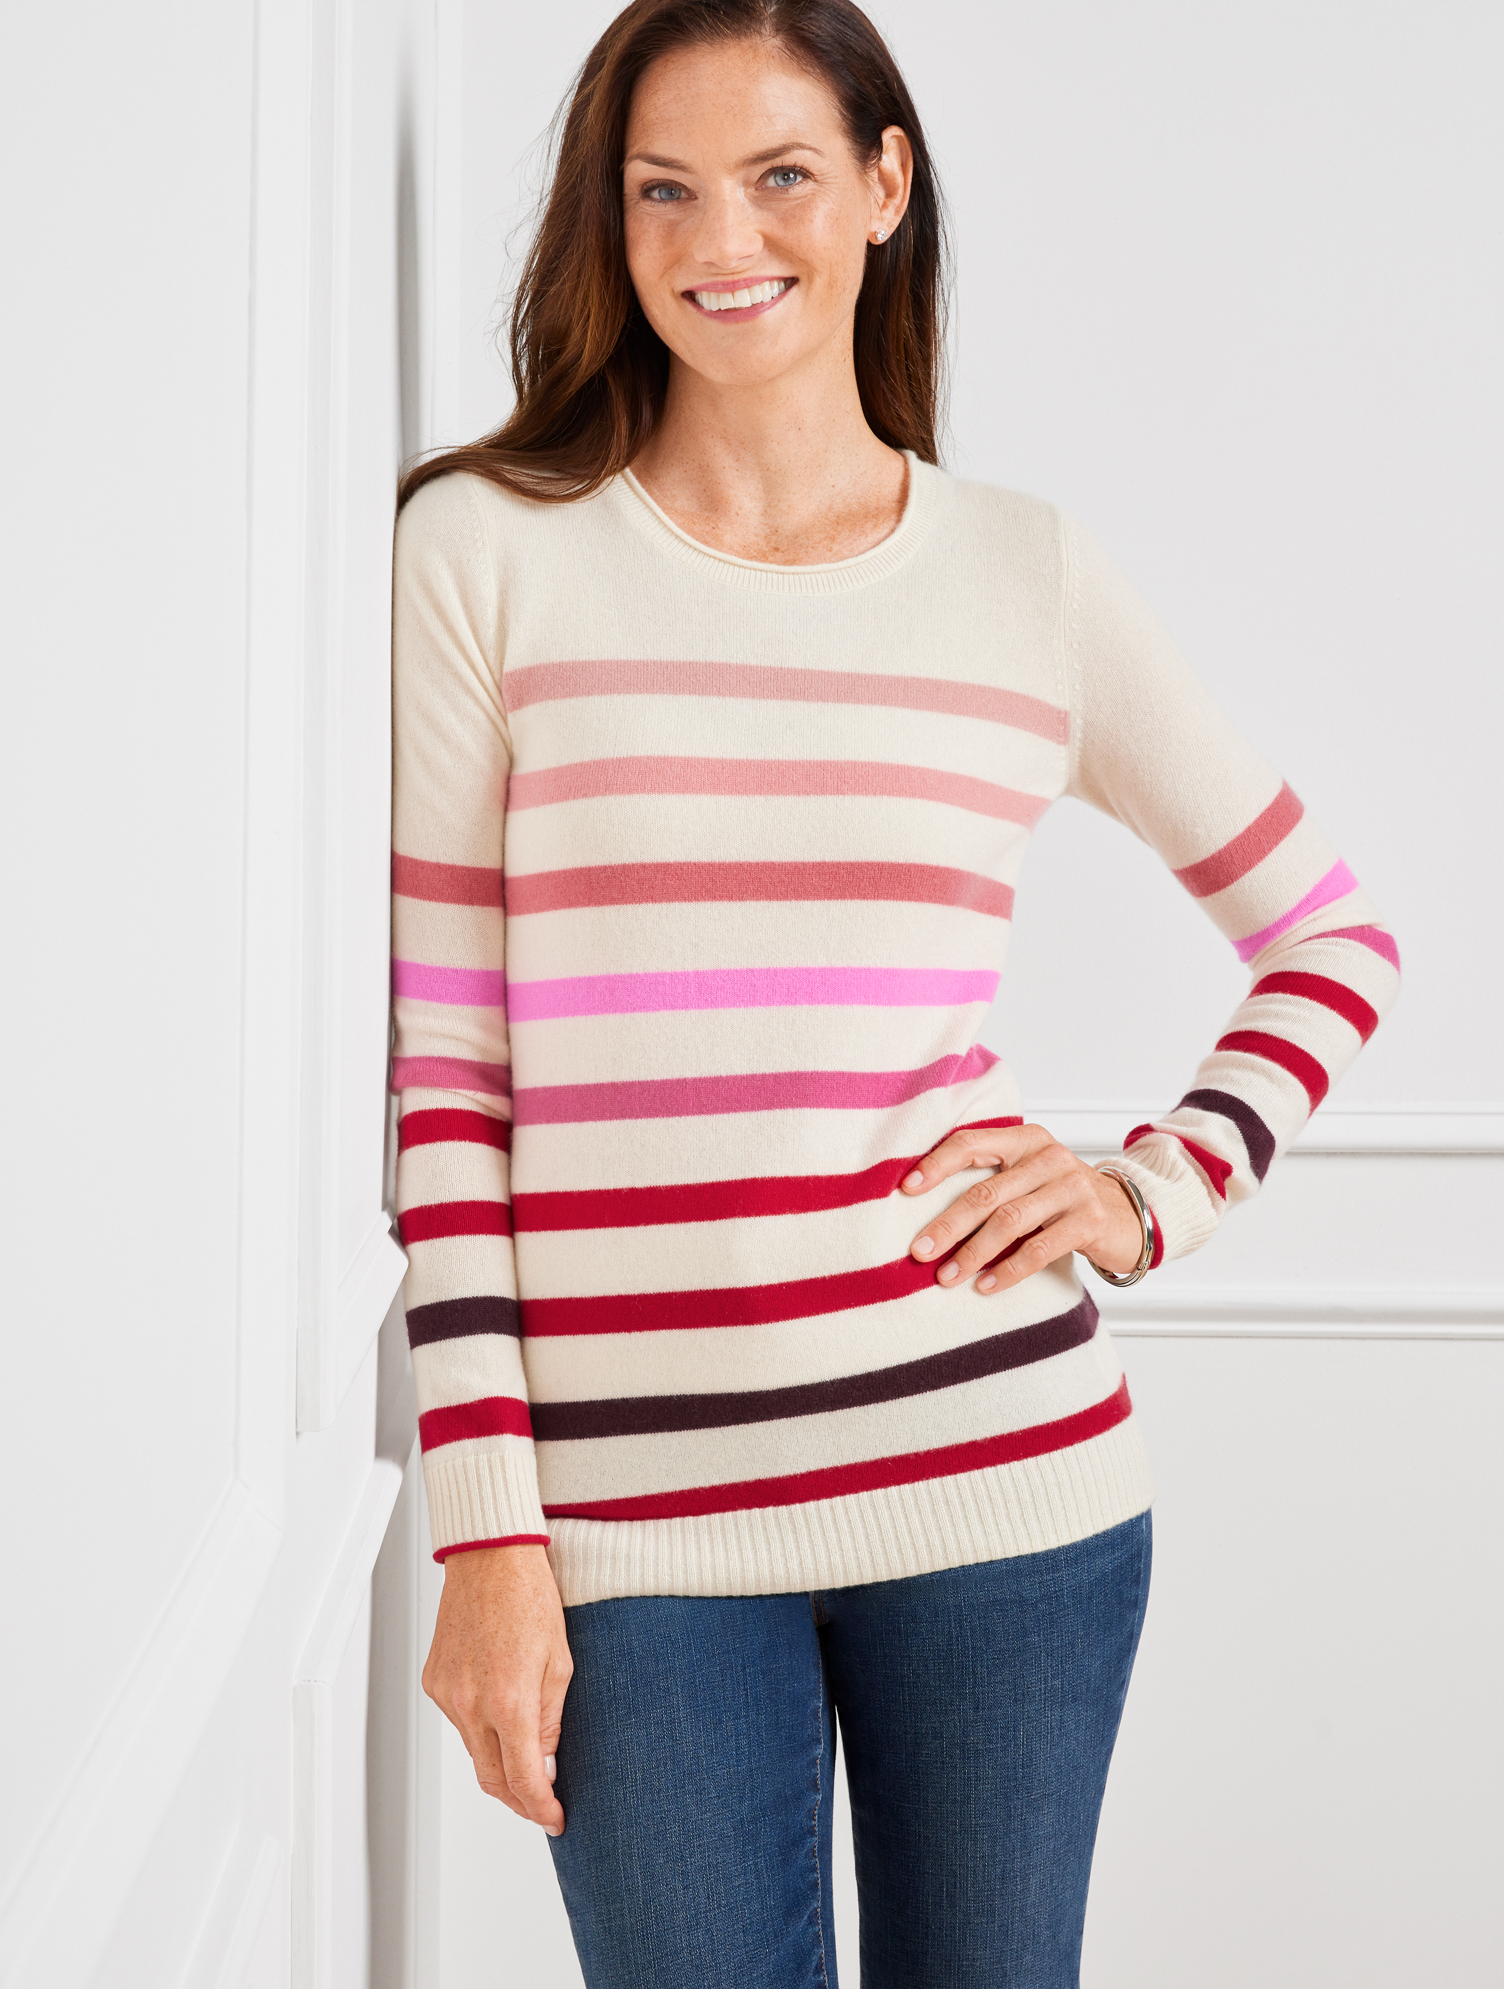 Talbots Plus Size - Cashmere Crewneck Sweater Pullover - Stripe - Ivory - 2x